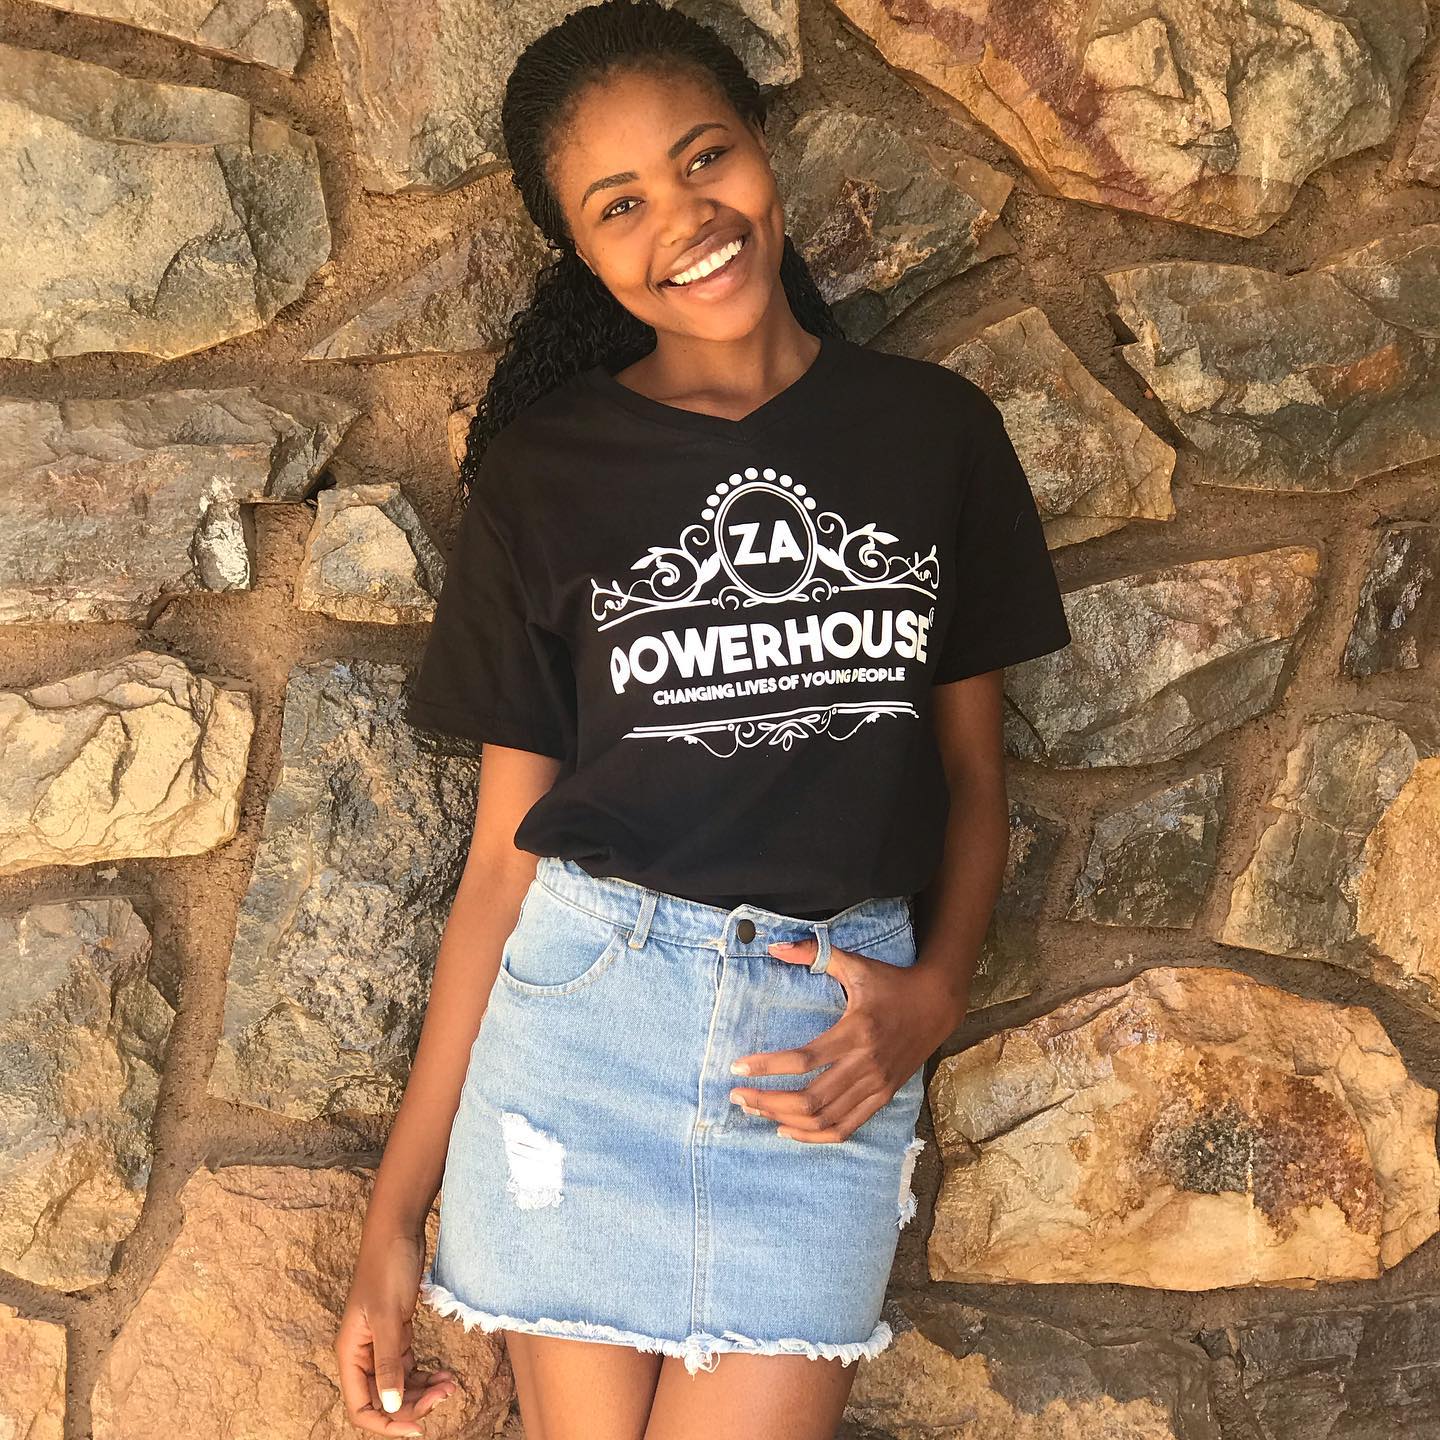 Zanele Phakathi Wearing Za Power House T-Shirt